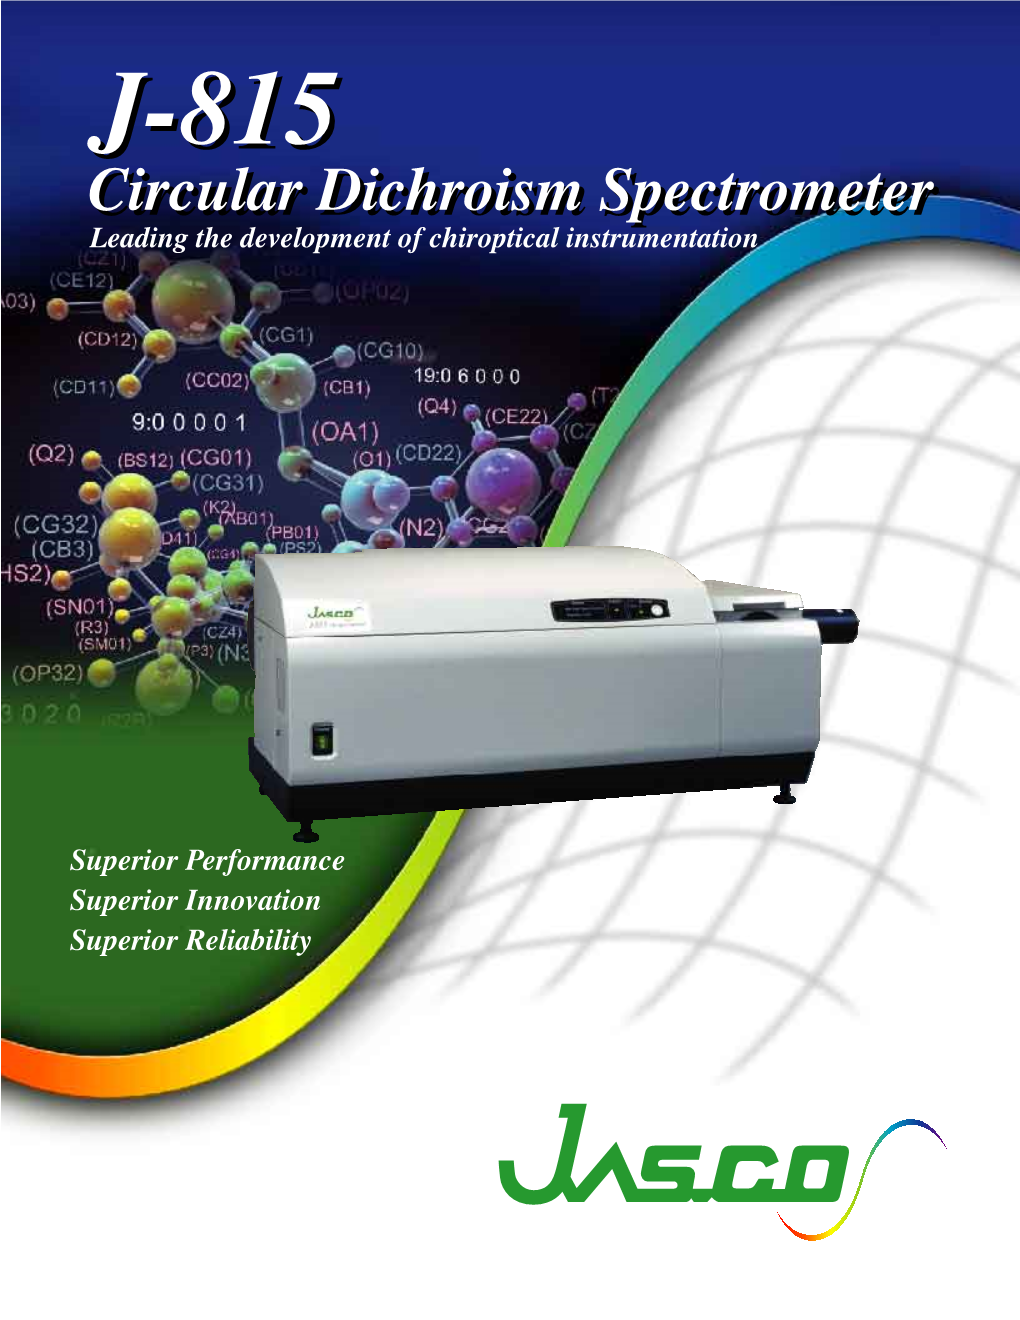 J-815J-815 Circularcircular Dicdichroismhroism Spectrometerspectrometer Leading the Development of Chiroptical Instrumentation